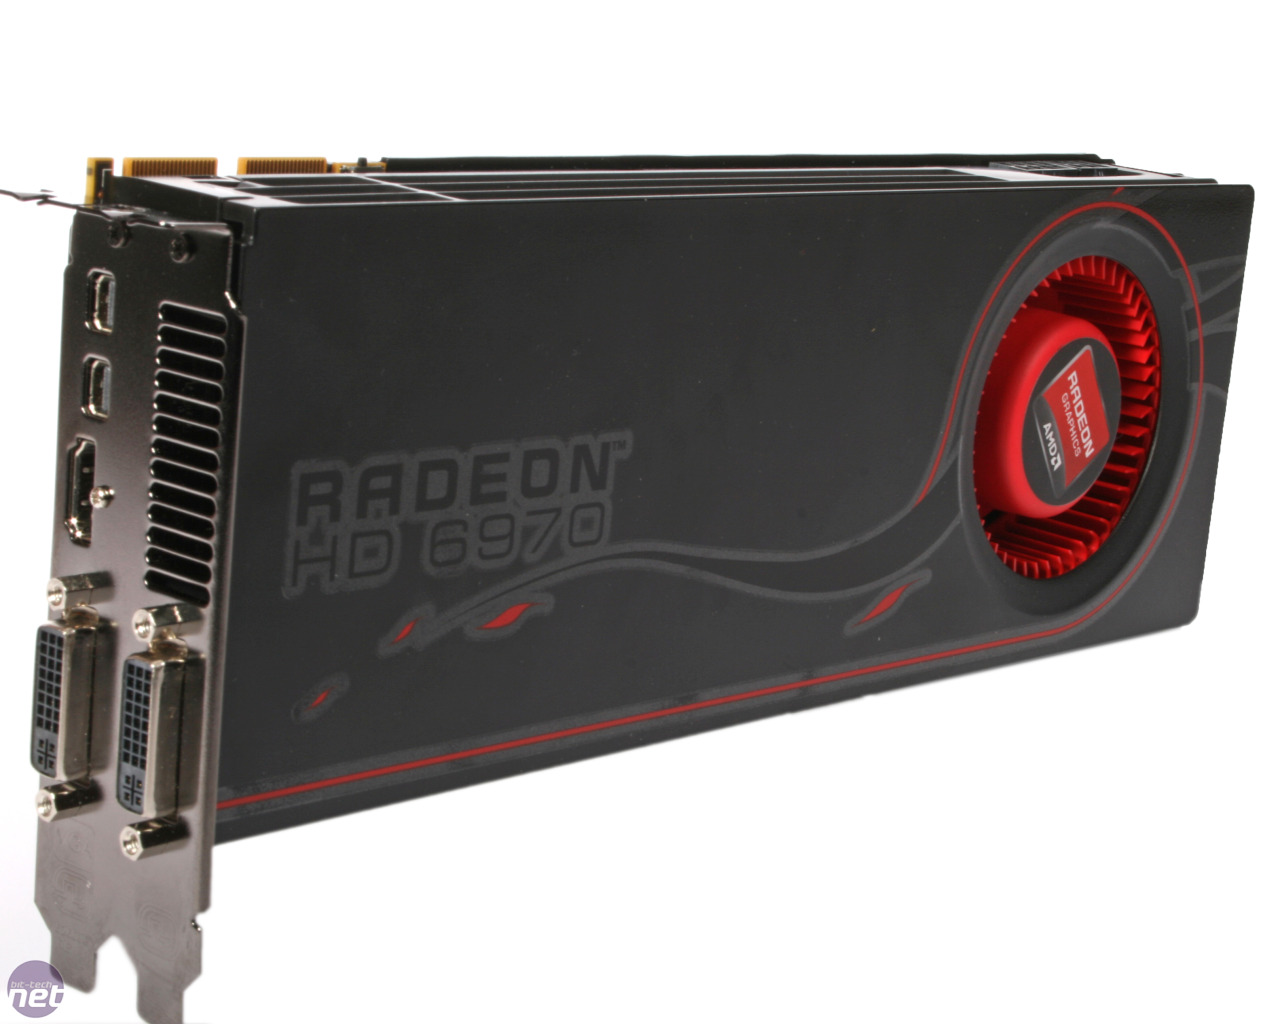 ATI Radeon HD 6970 2GB Review | bit 